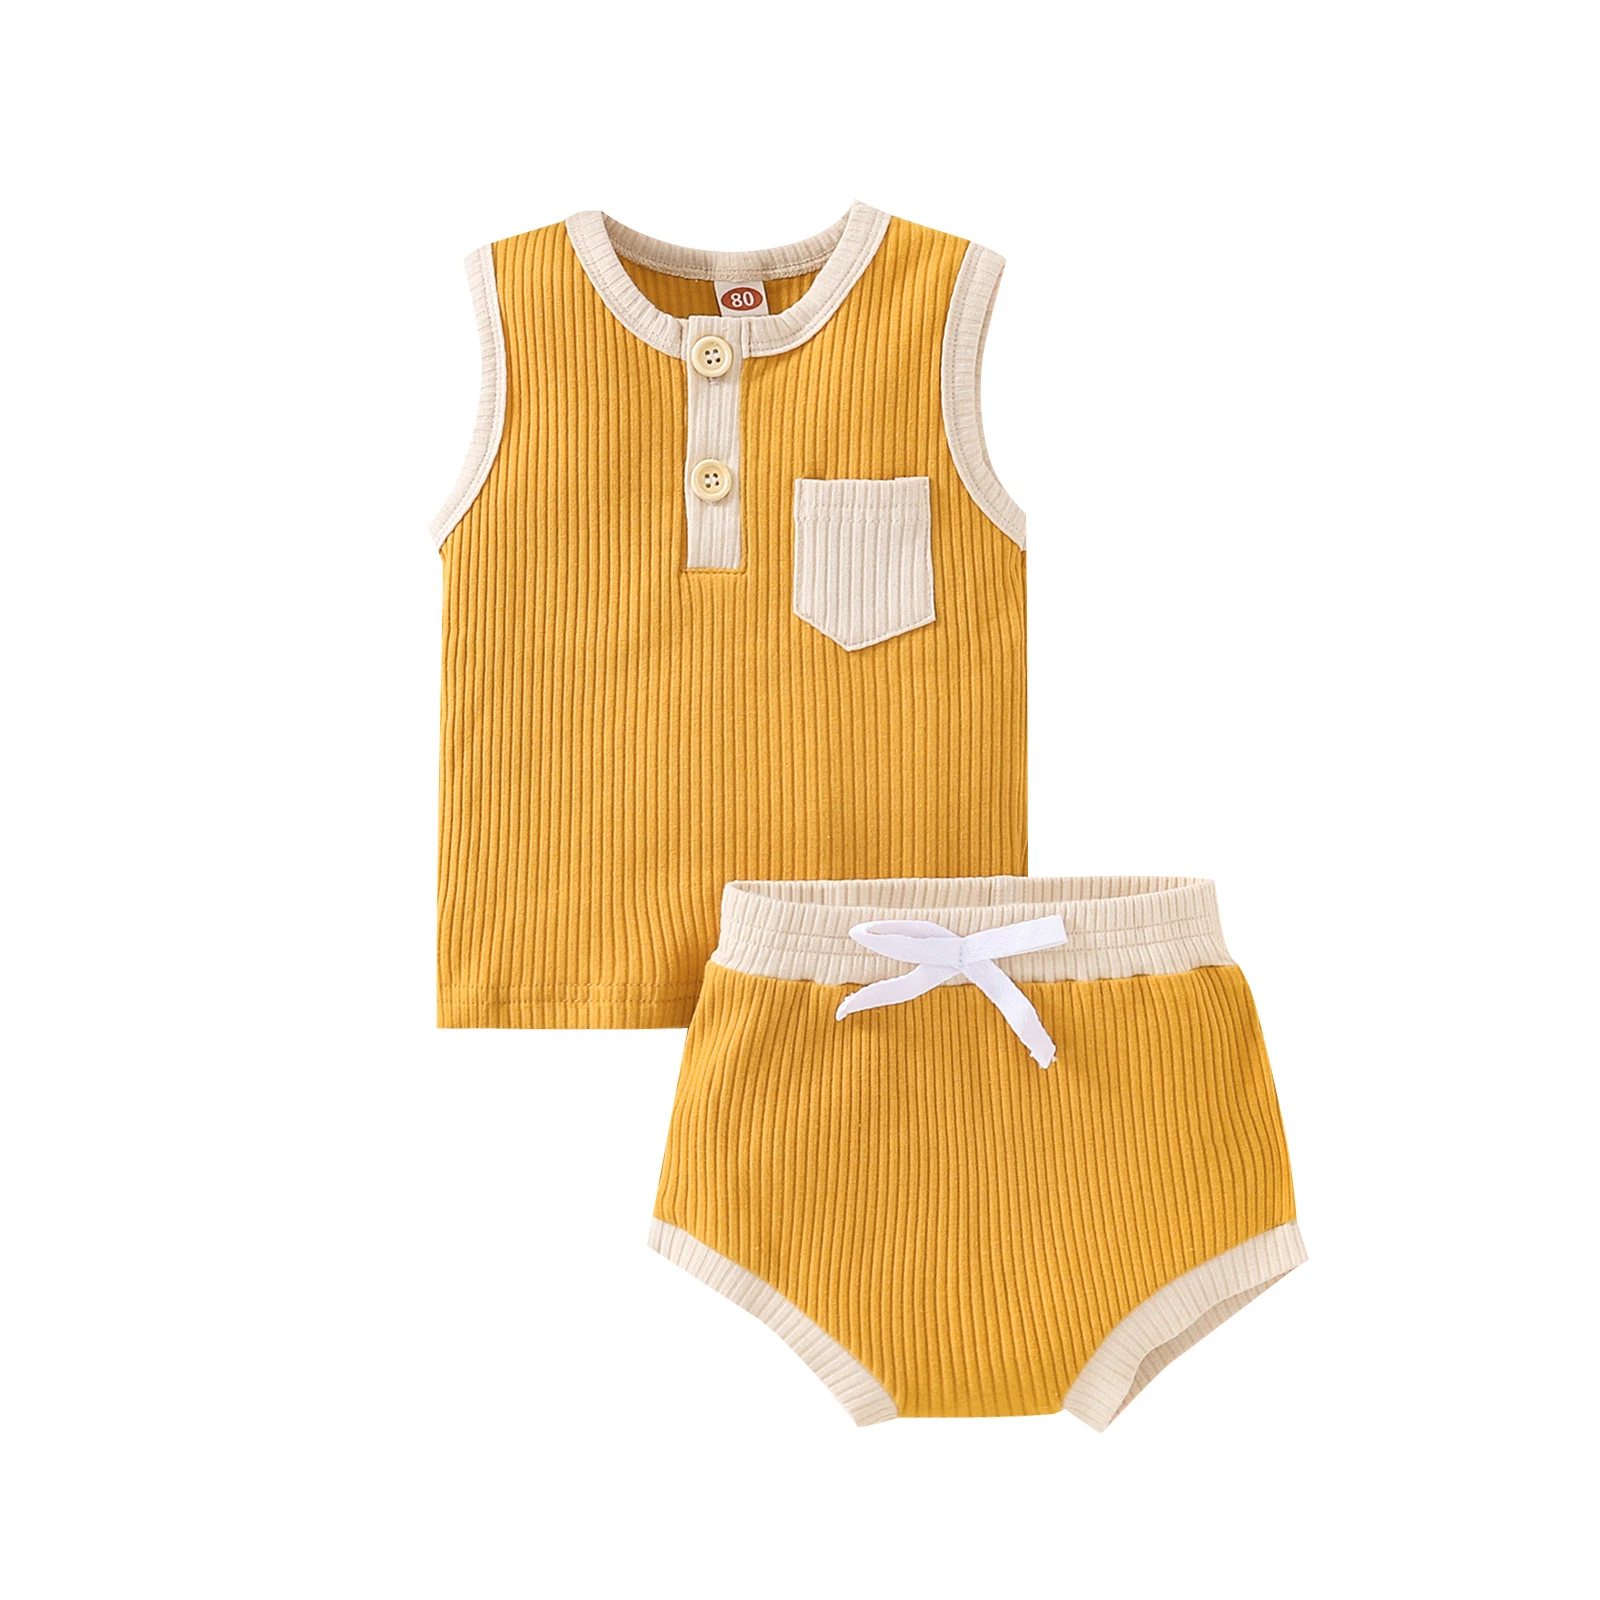 Baby Clothing Set best of sale Summer 2022 Infant Boys Girls Suit Sleeveless Pocket Patchwork Top Bandage Triangle Shorts 2pcs Baby Clothing baby outfit matching set